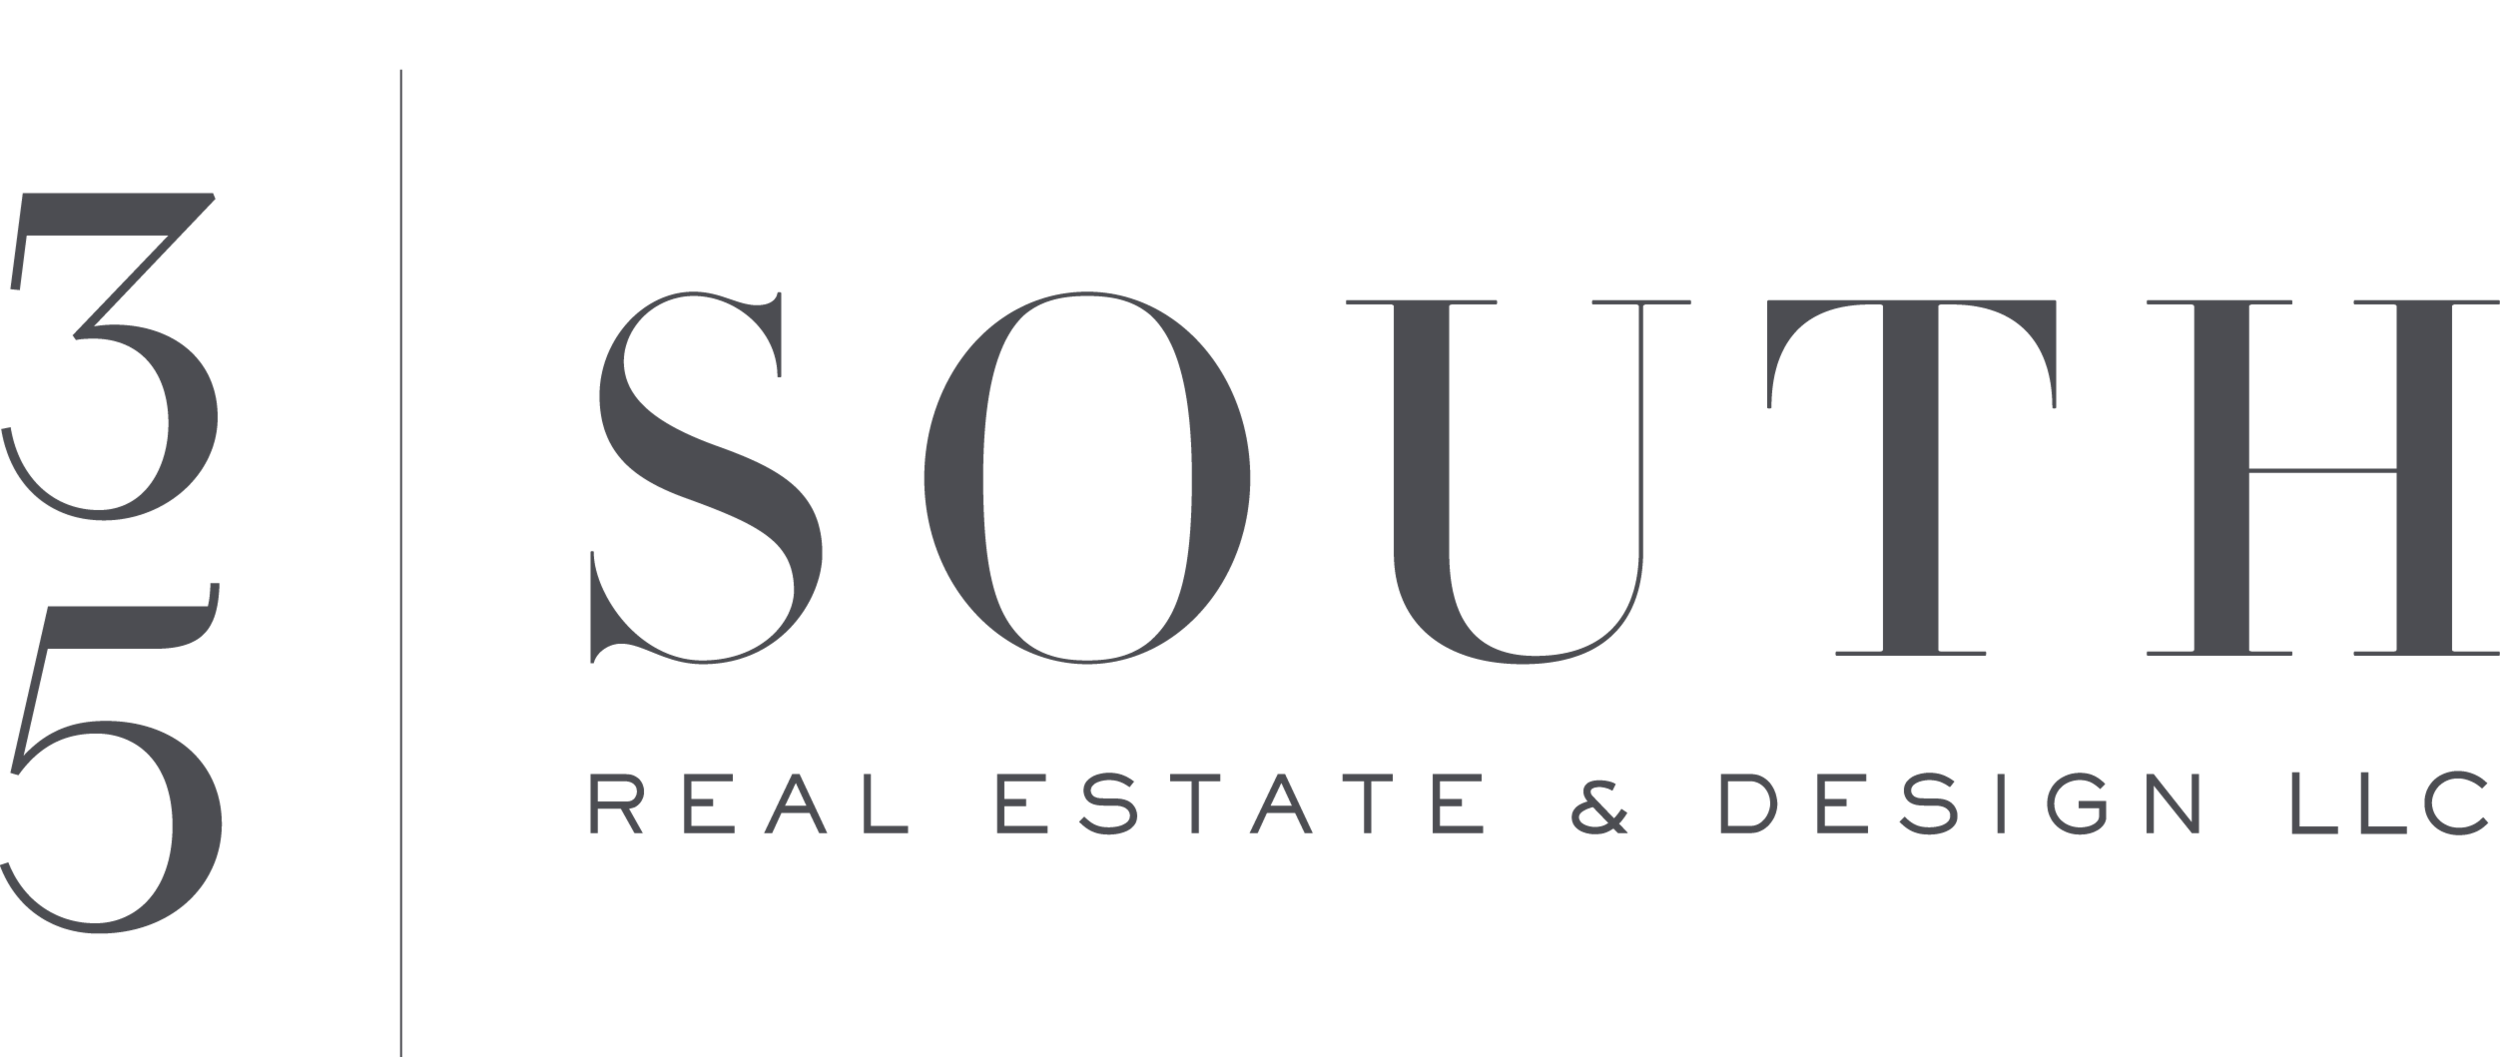 35 South Real Estate &amp; Design LLC